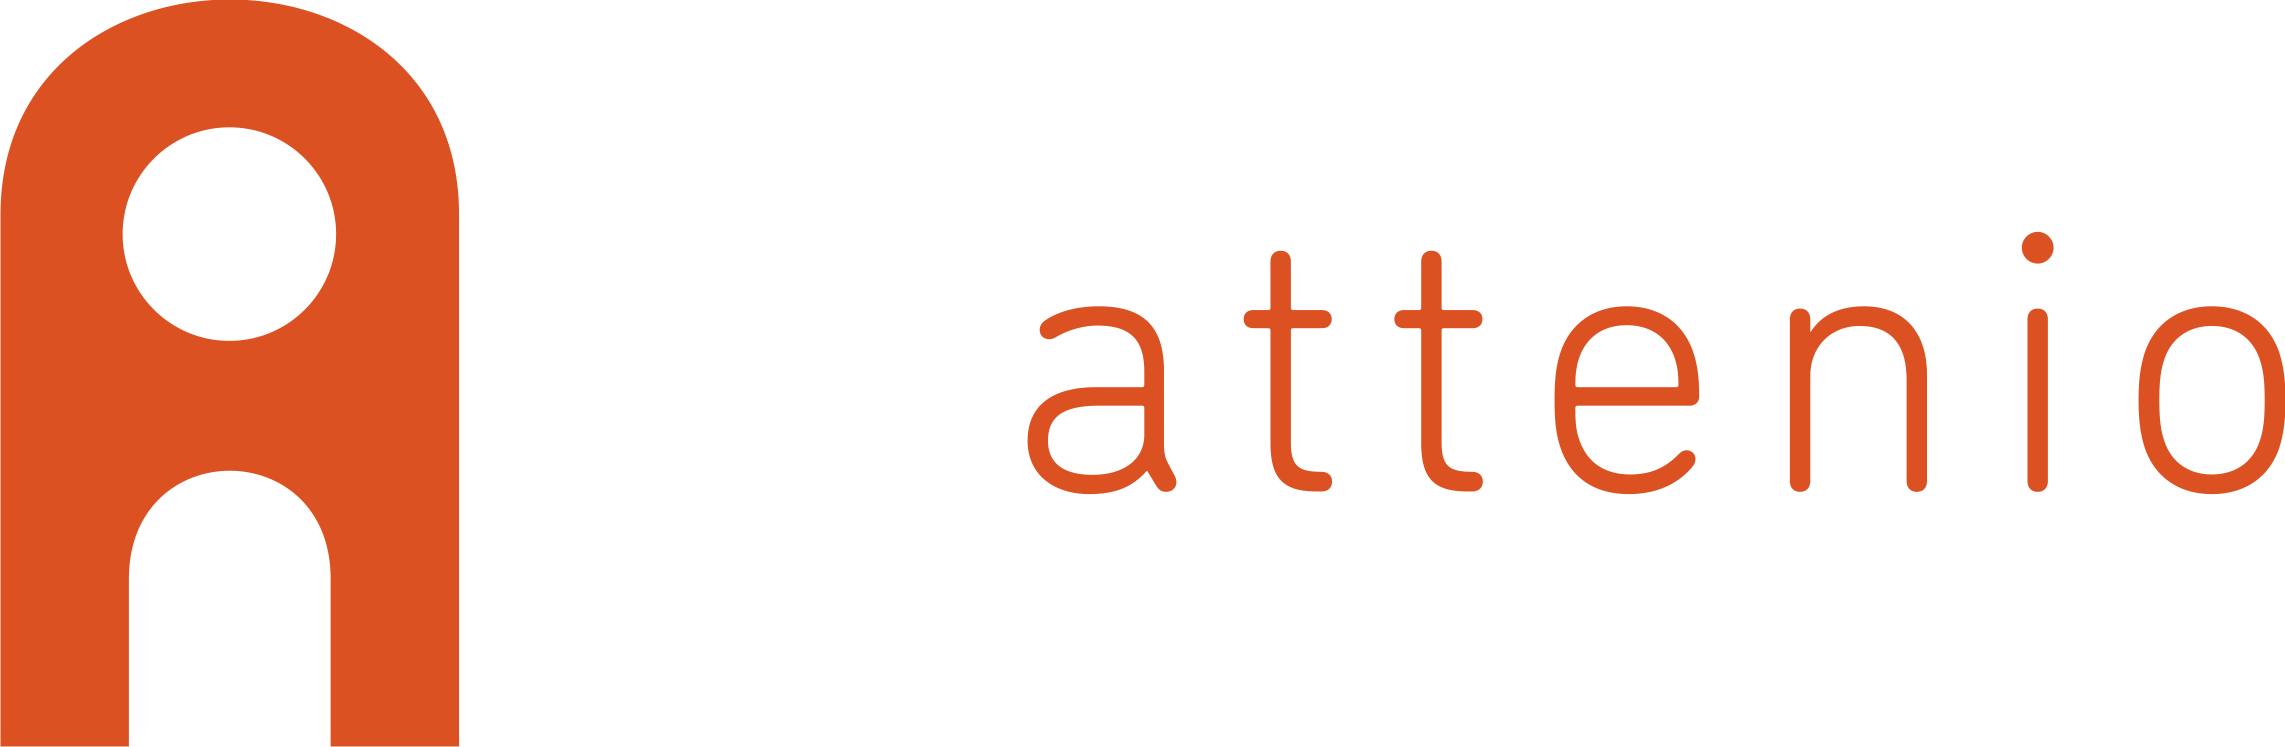 attenio branding in orange